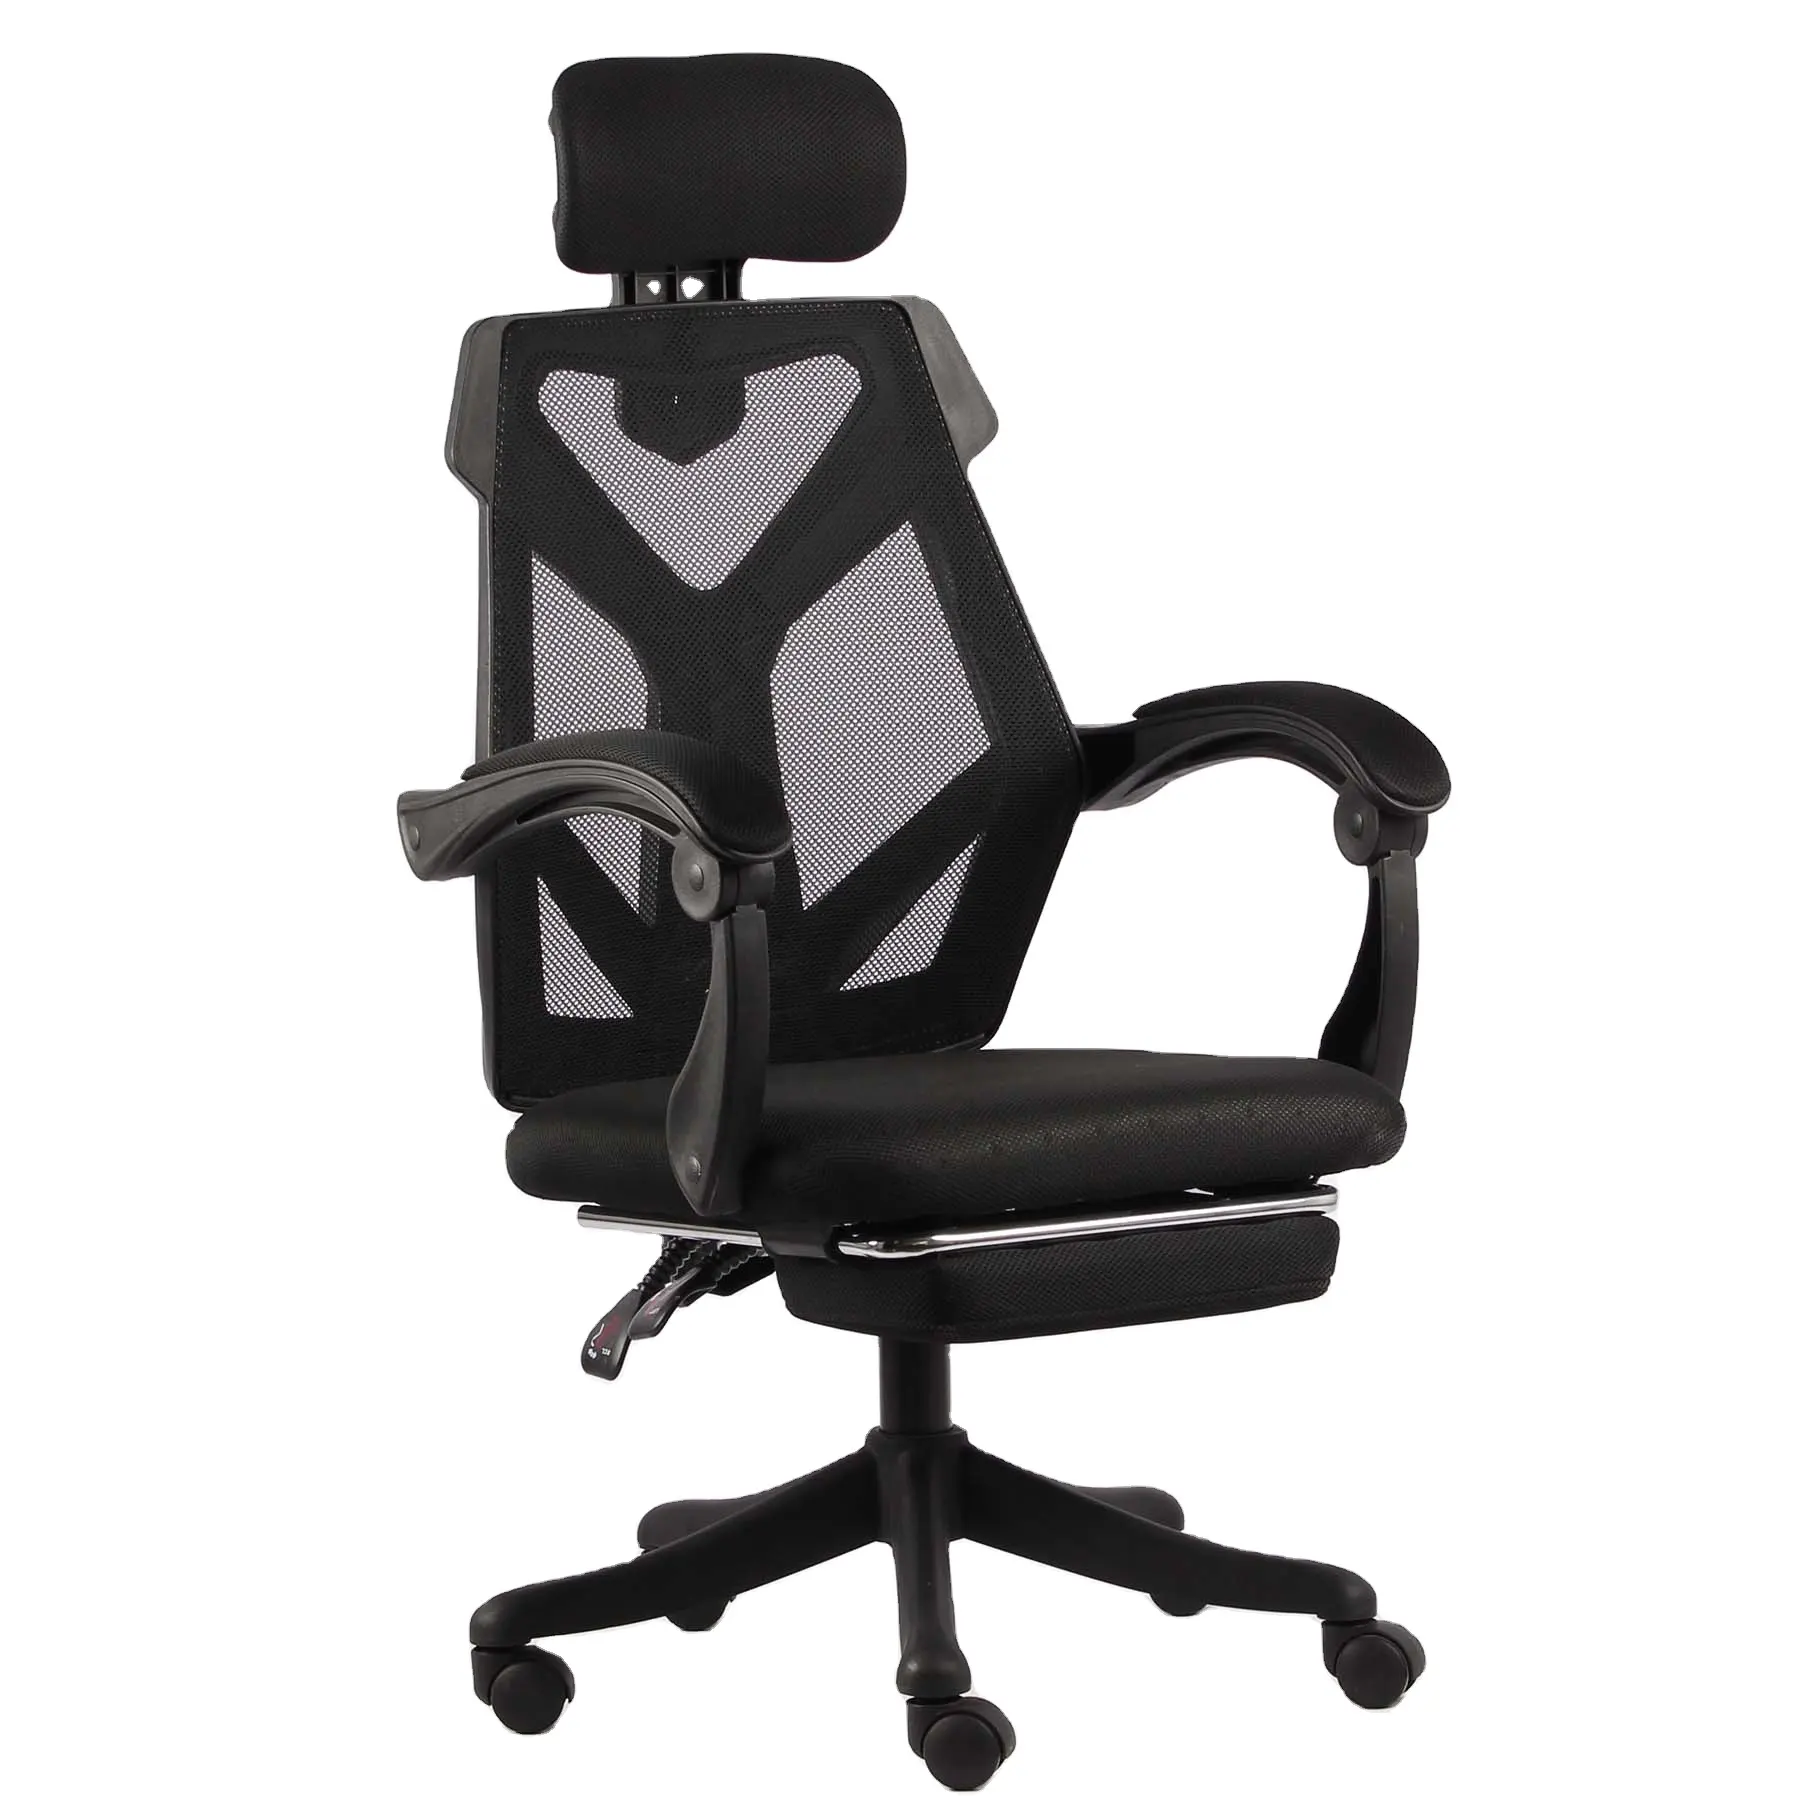 Comfortable design convenience world motorized ceo excecutive modern luxury office desk chair